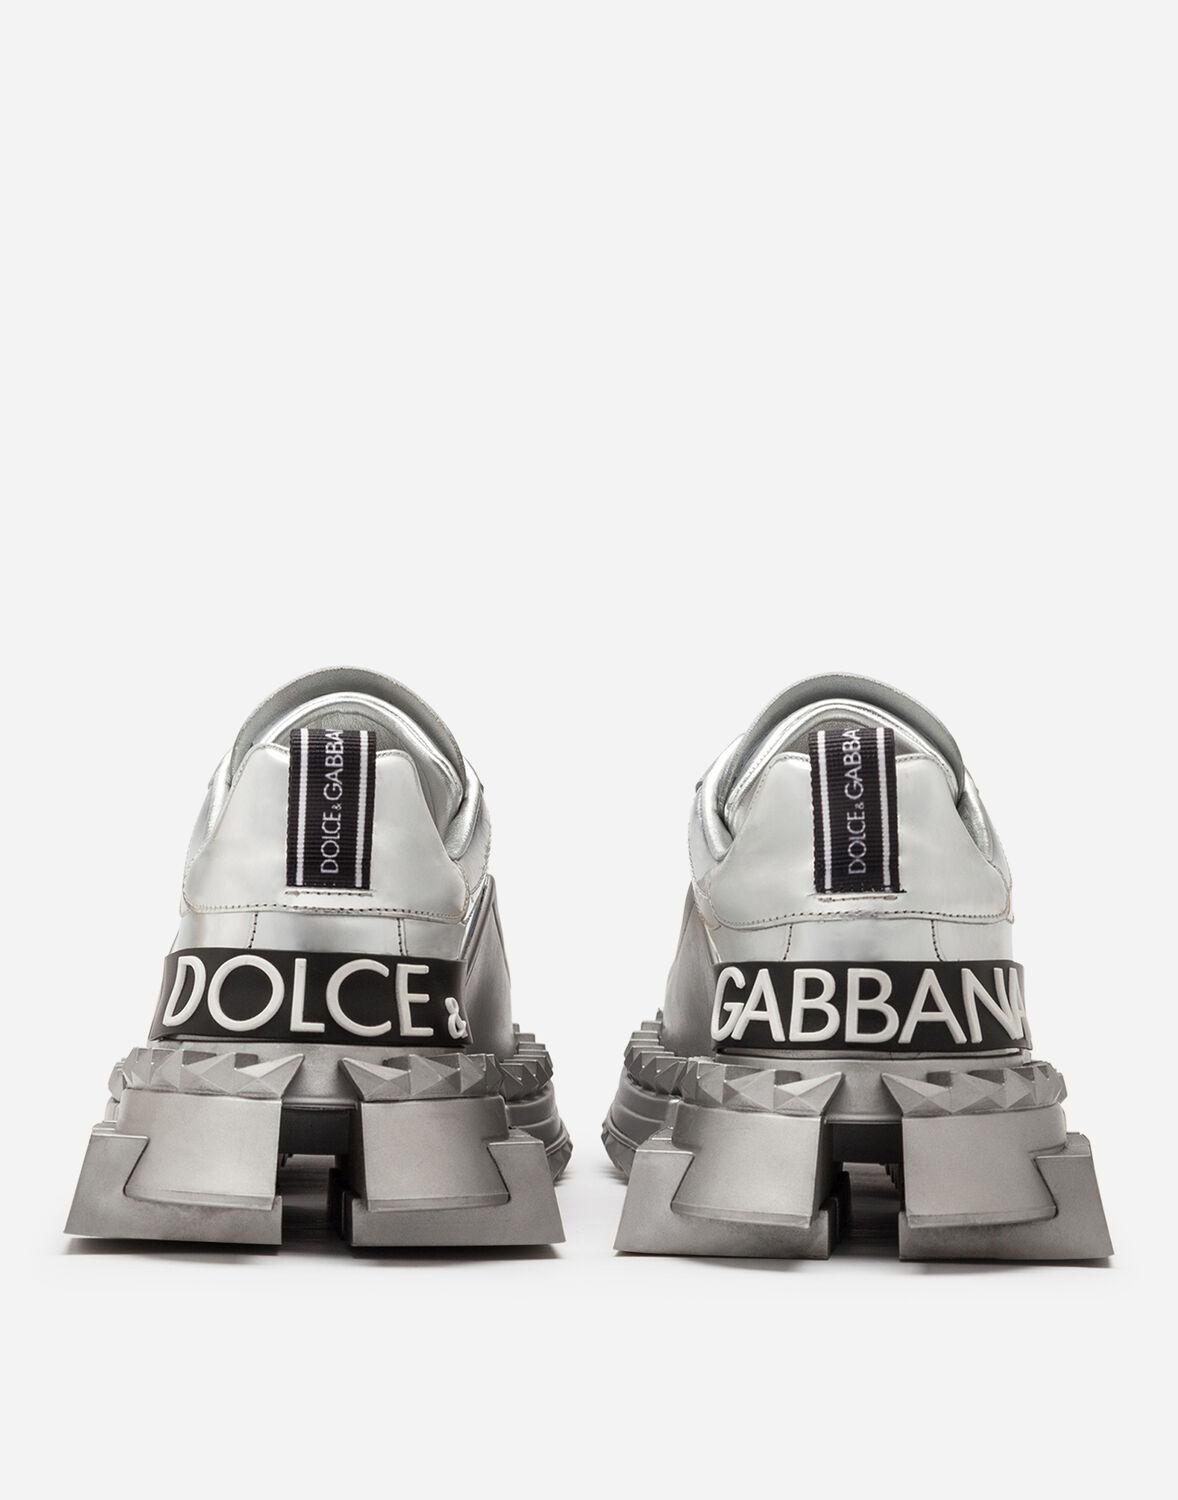 Dolce & Gabbana Mirrored Calfskin Super Queen Sneakers in Metallic | Lyst